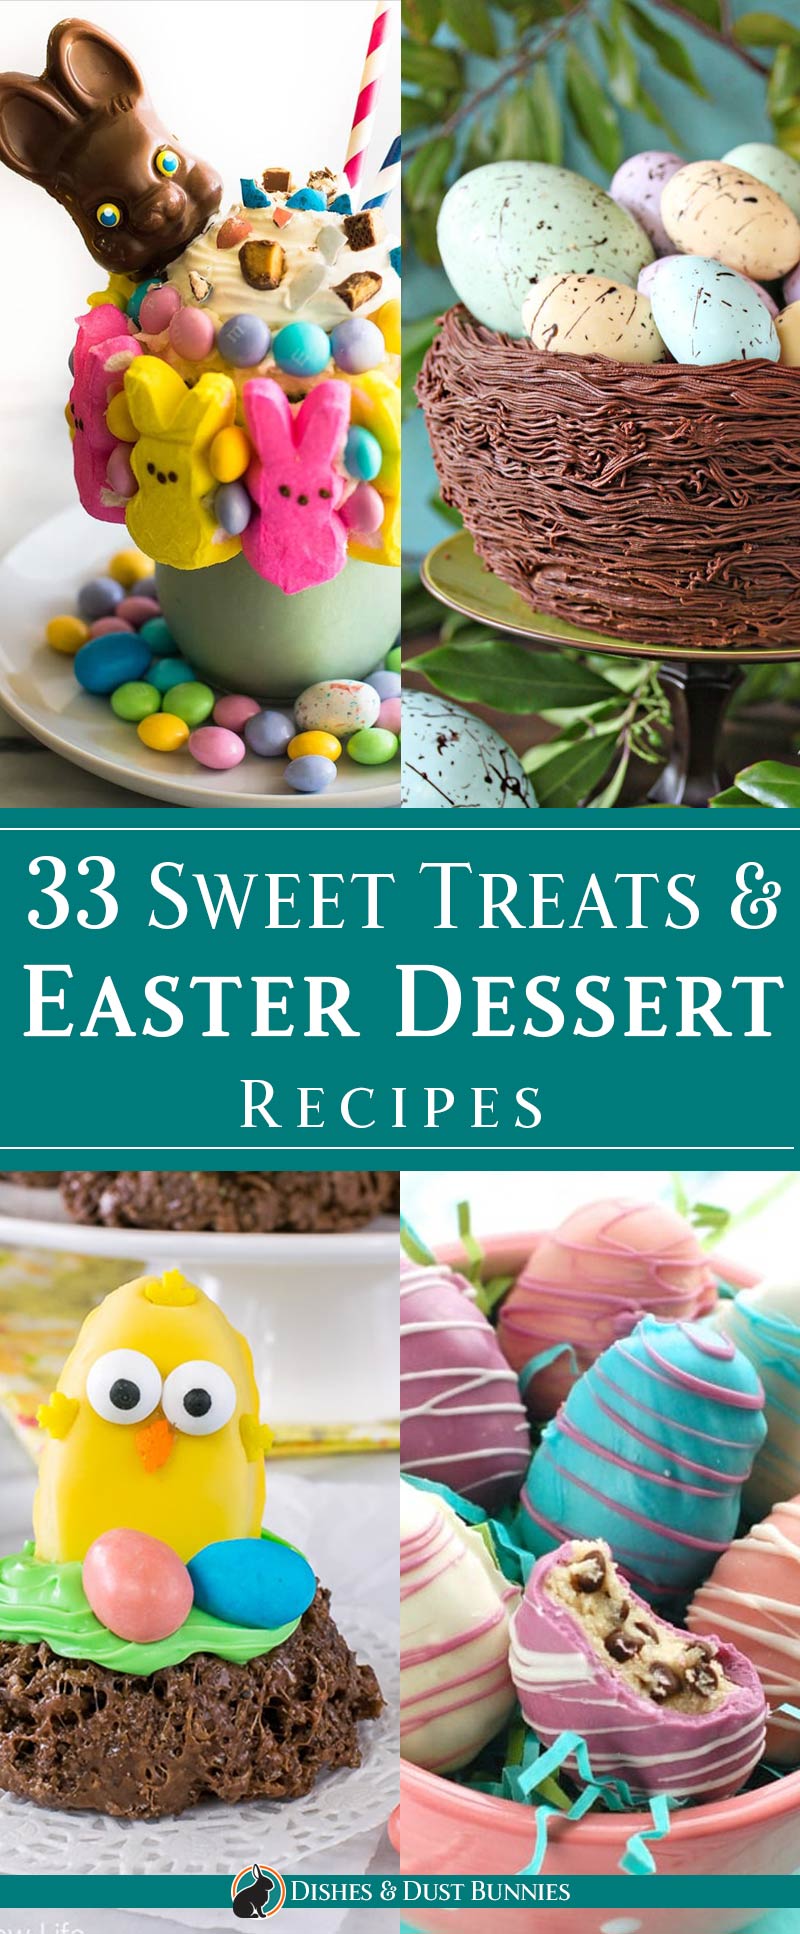 33 Sweet Treats and Easter Dessert Recipes - dishesanddustbunnies.com